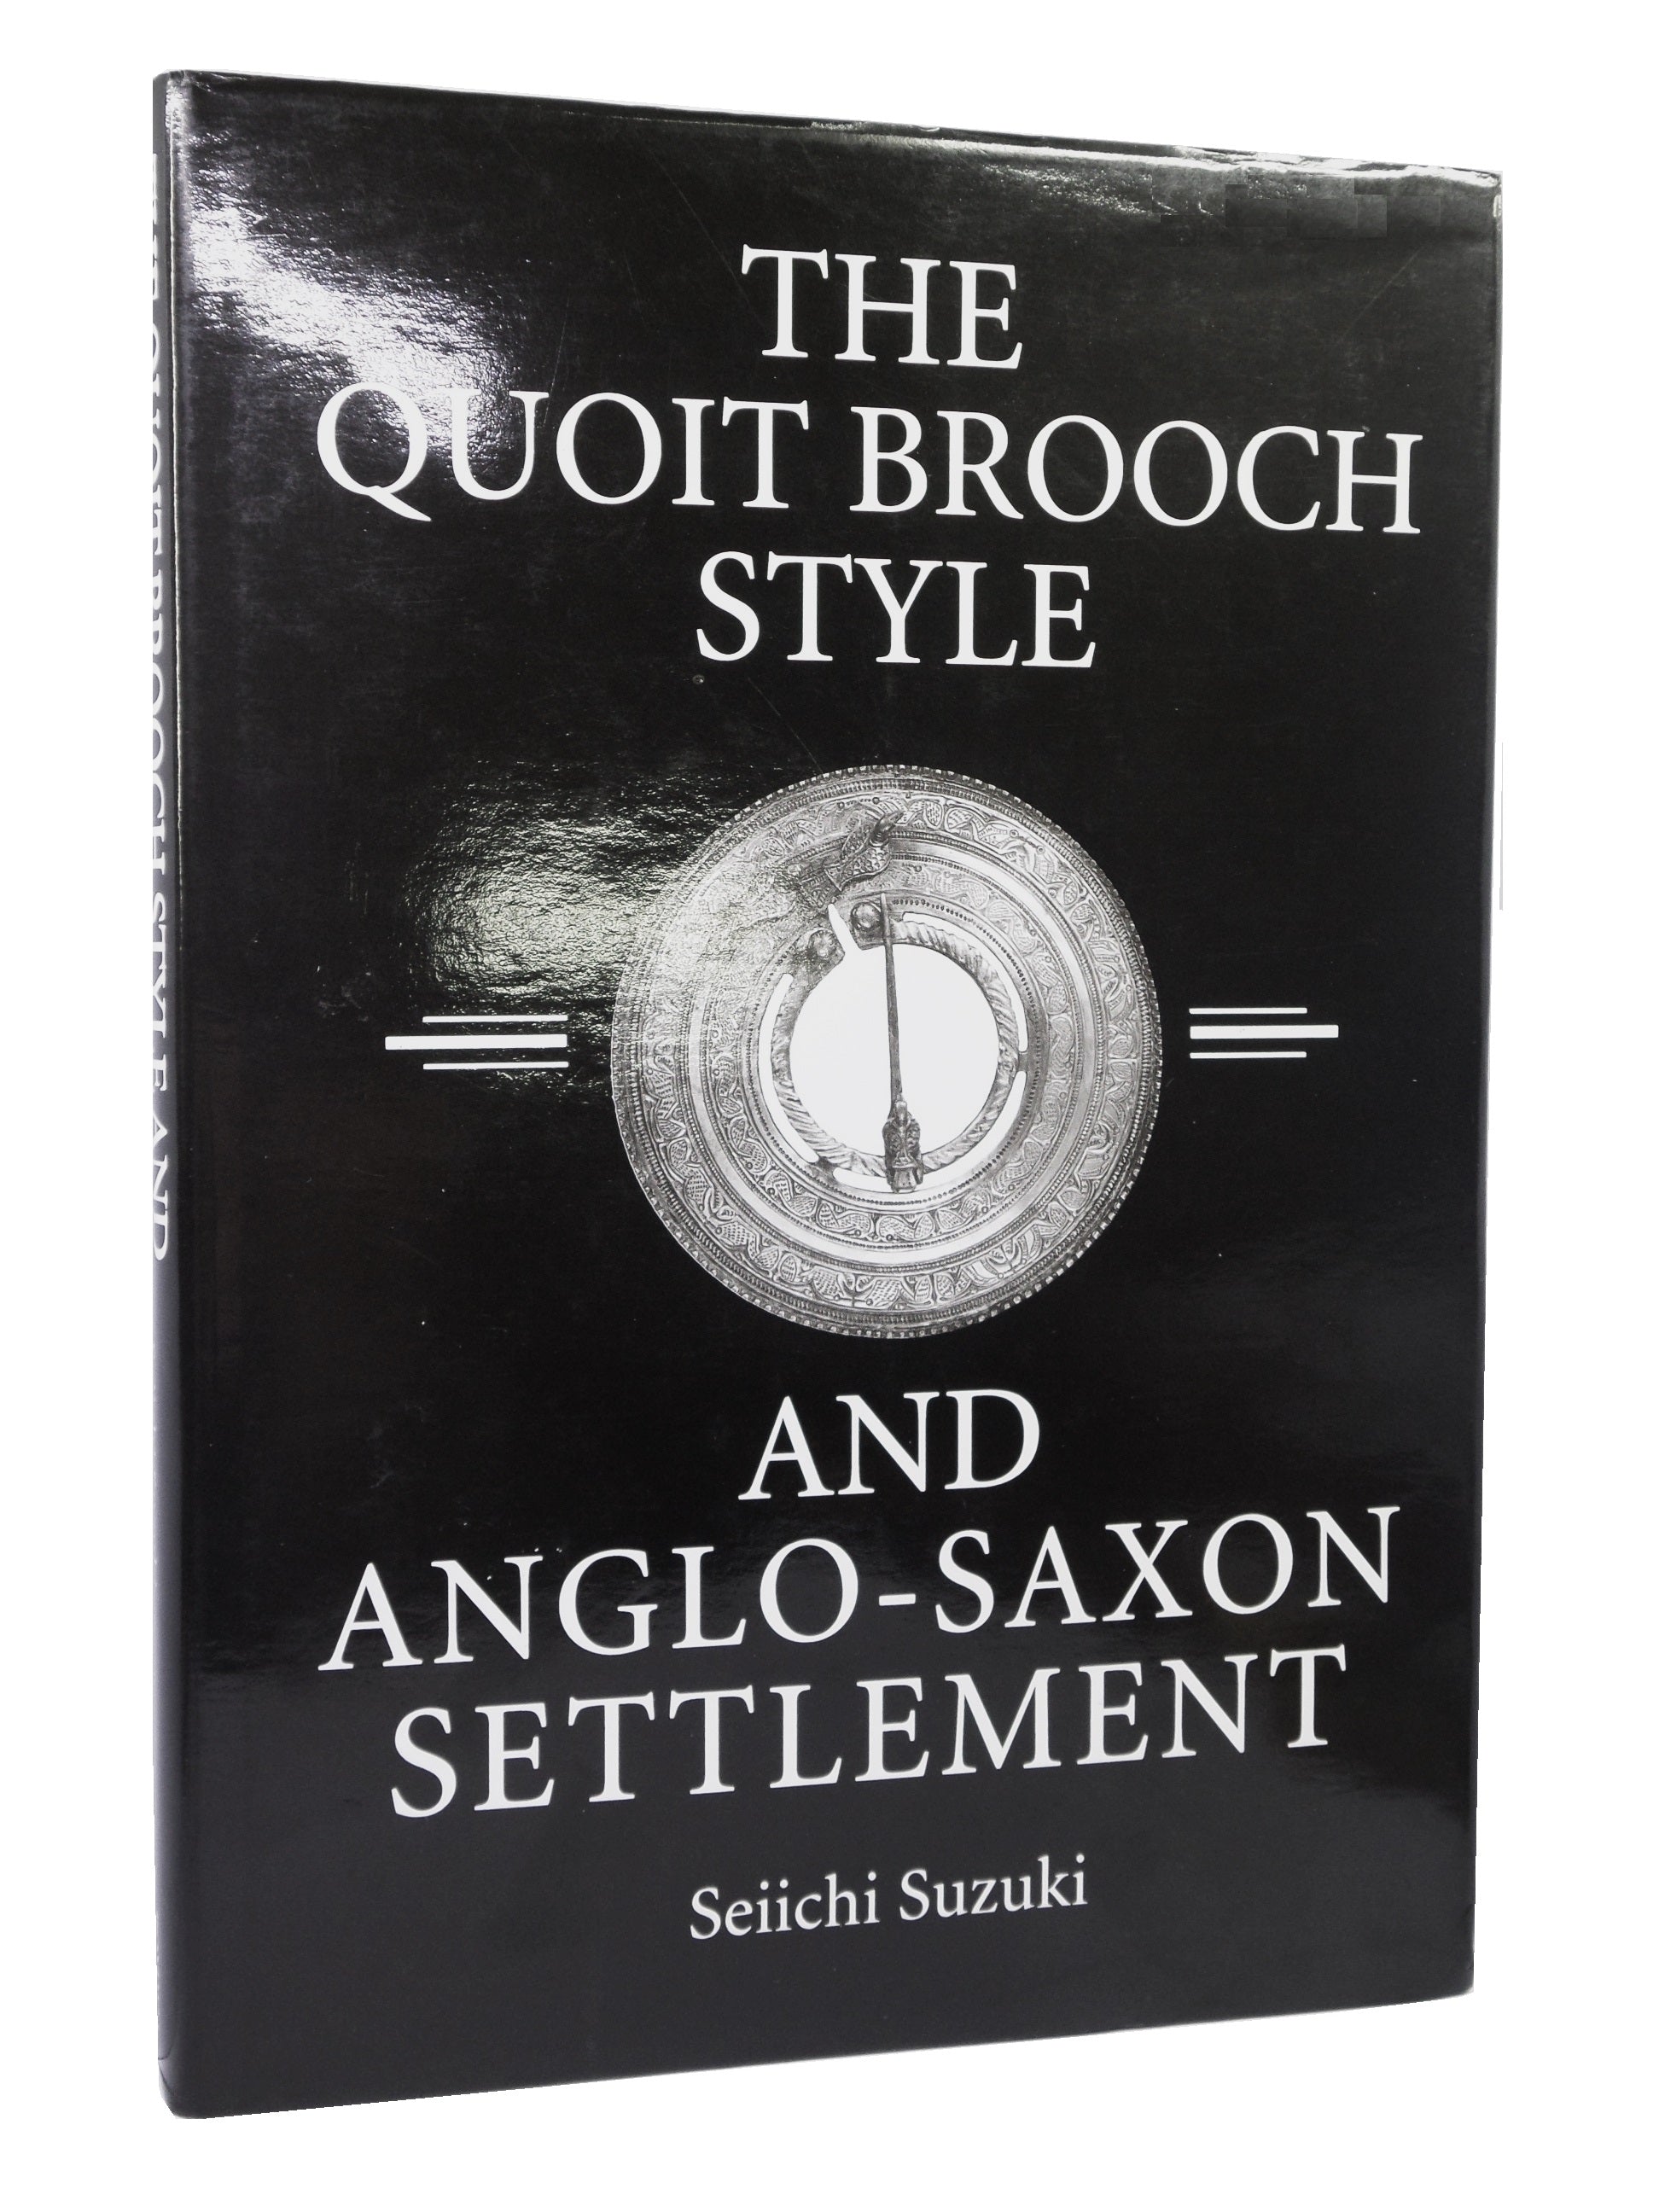 THE QUOIT BROOCH STYLE & ANGLO-SAXON SETTLEMENT BY SEIICHI SUZUKI 2000 HARDBACK